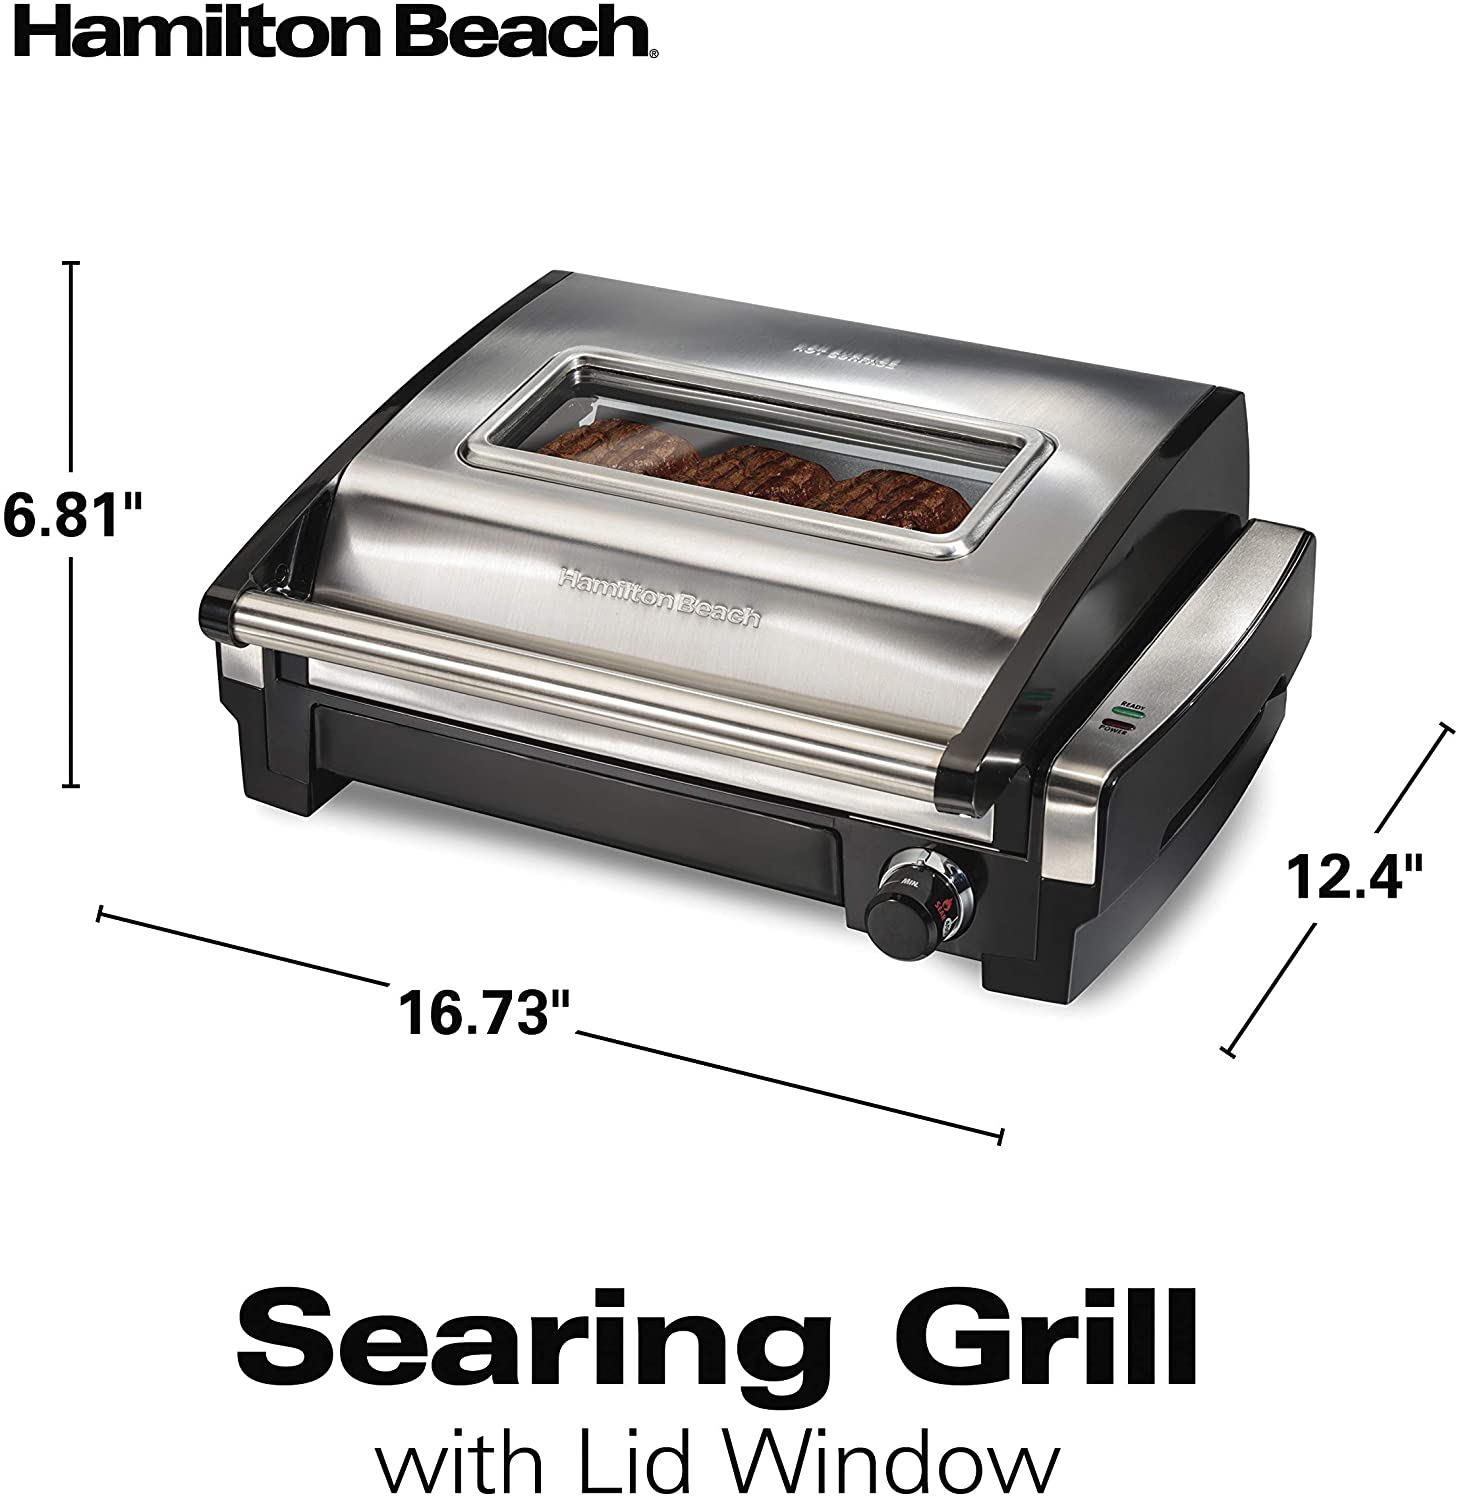 Hamilton Beach Electric Searing Grill specs